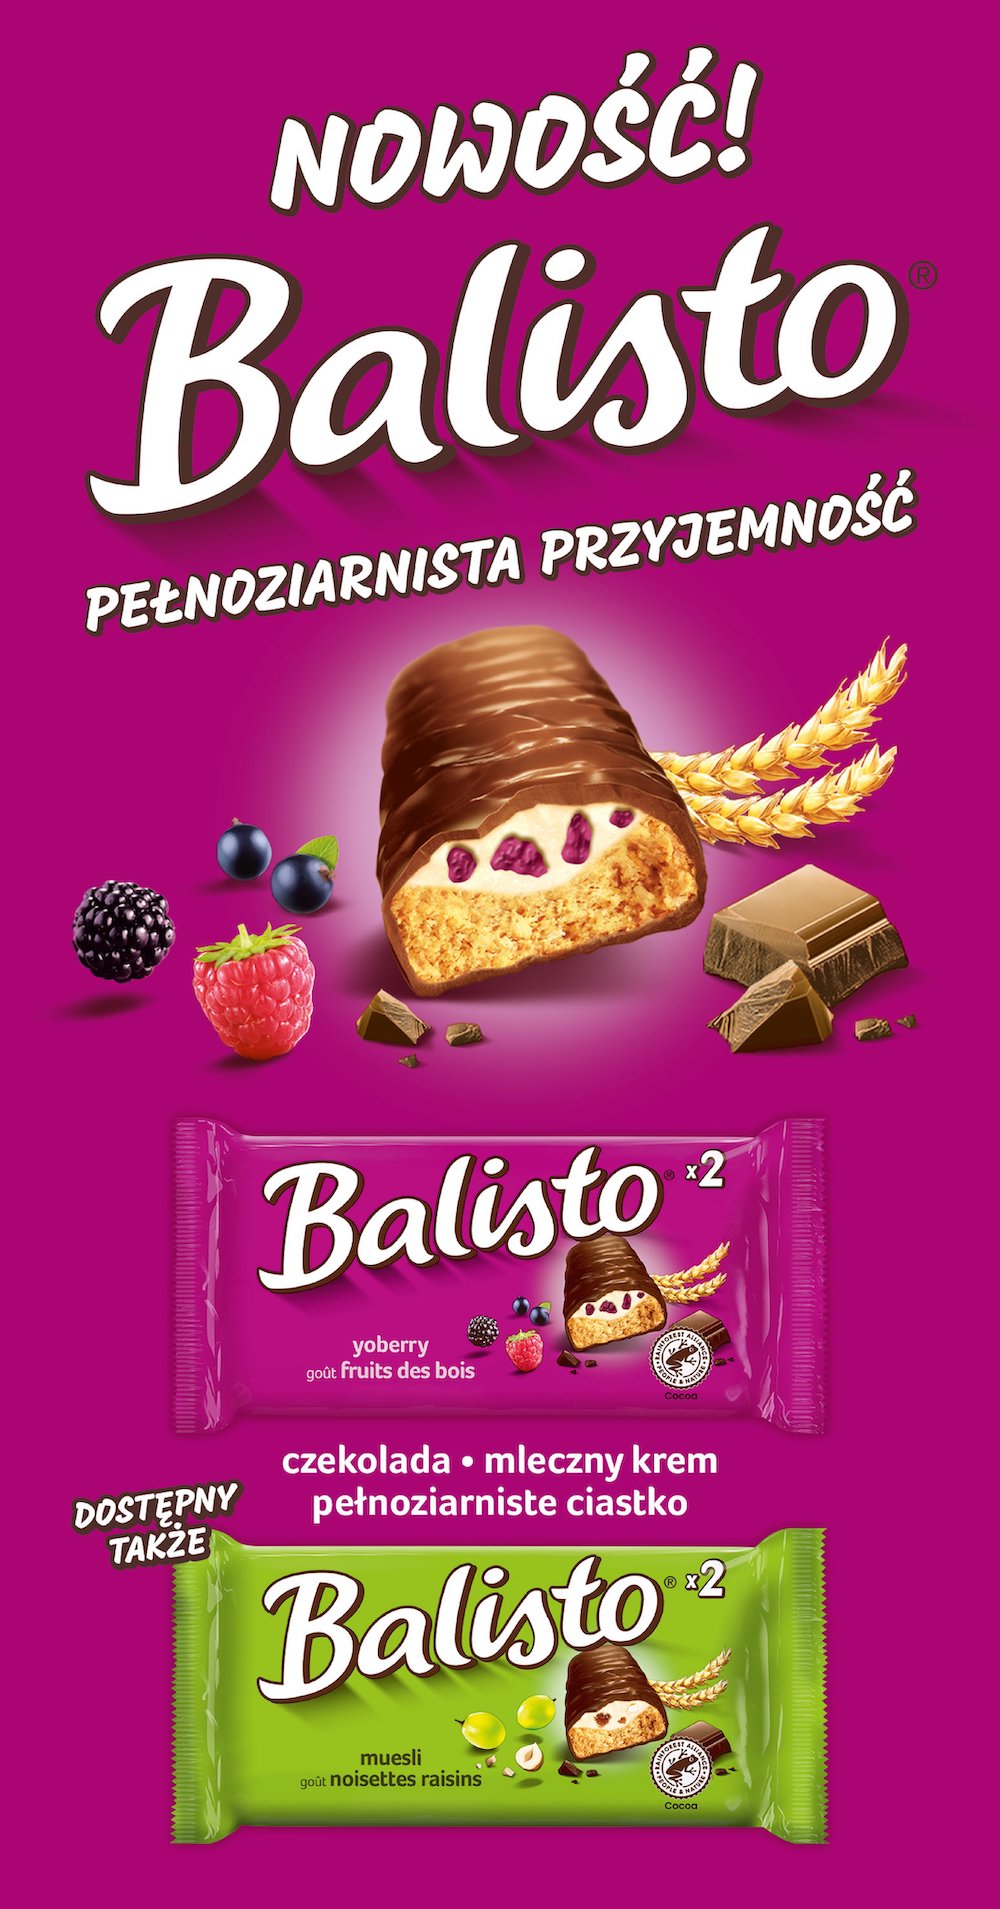 Balisto yoberry goût fruits des bois - 9